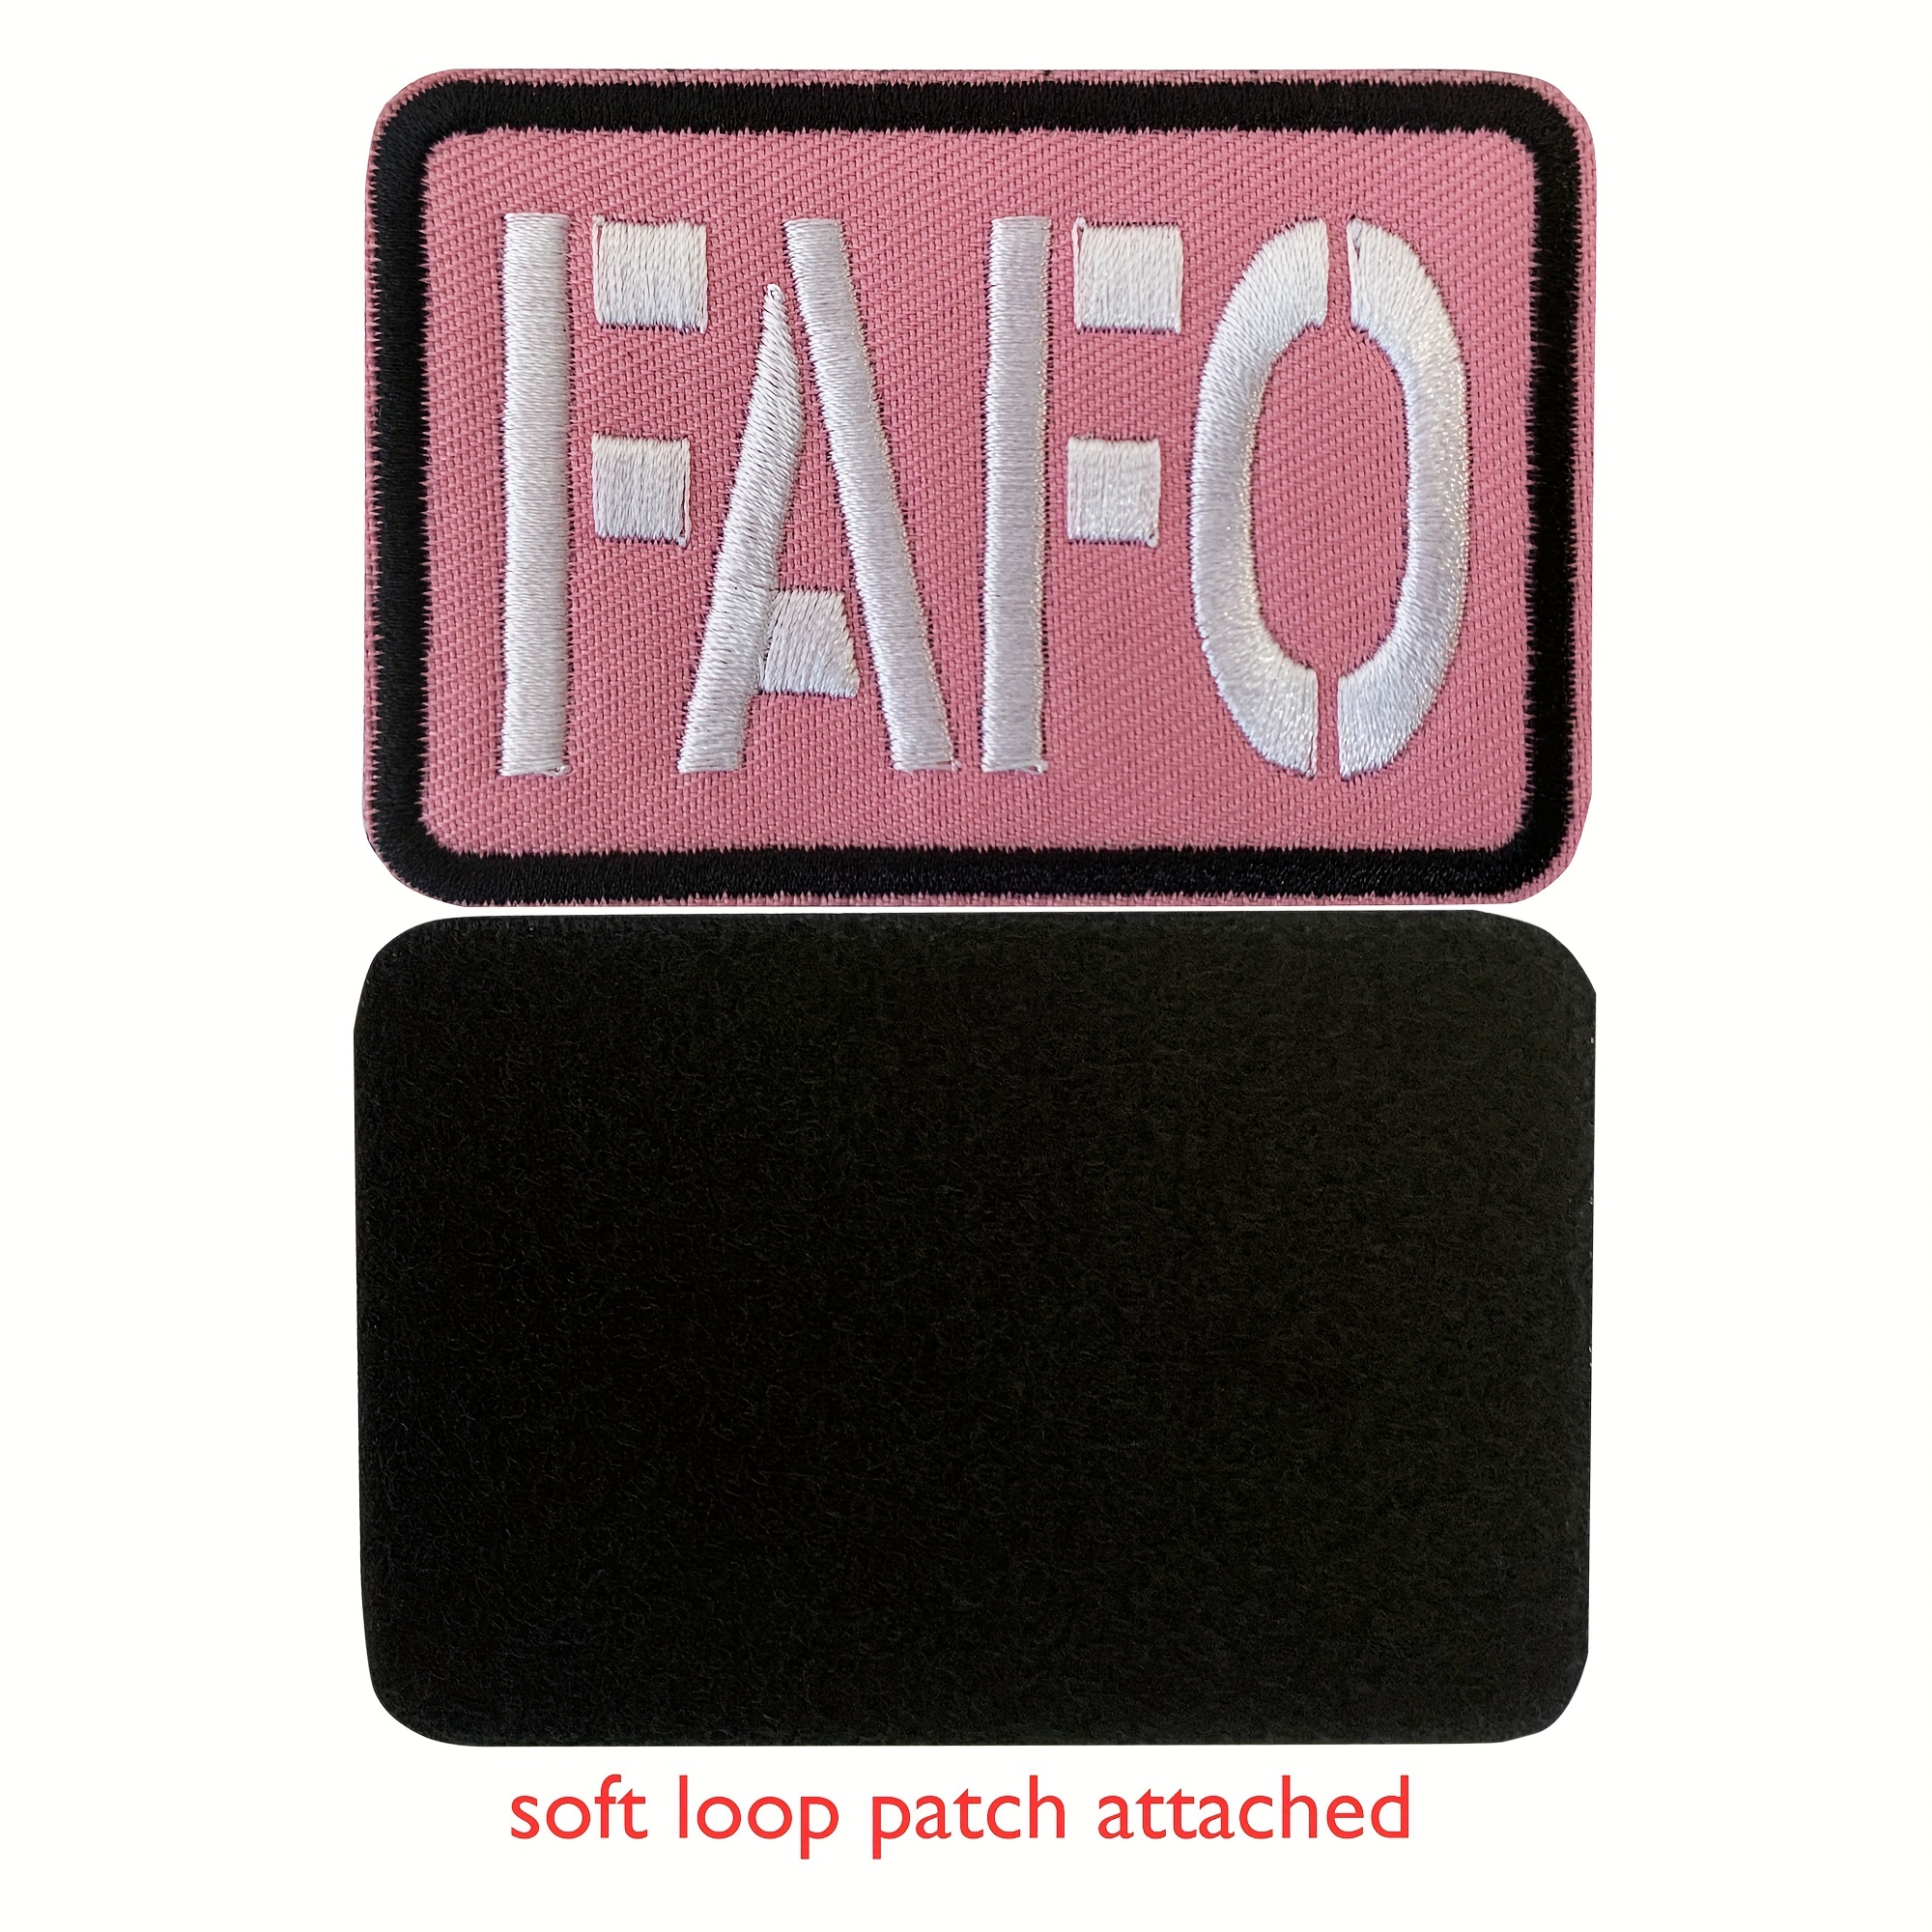 FAFO Patch 3 X 2 